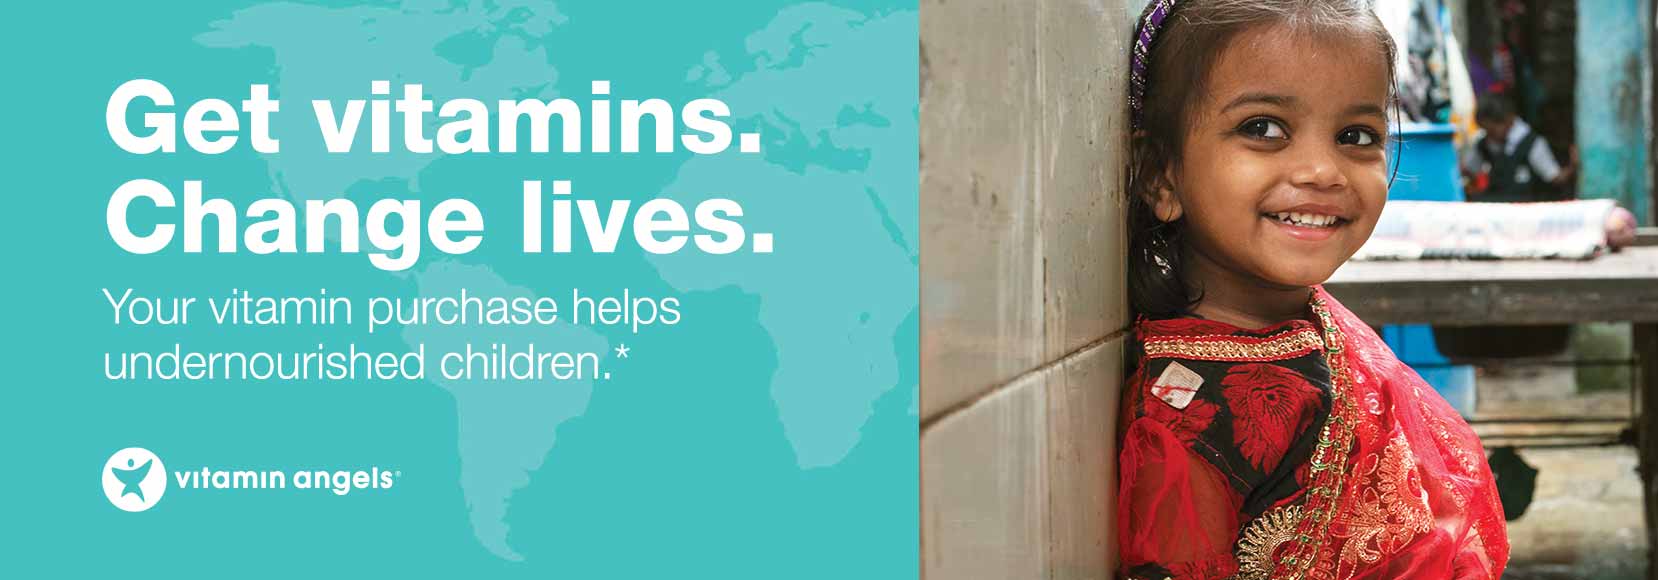 Get vitamins. Change lives. Your vitamin purchase helps undernourished children.* Vitamin Angels.